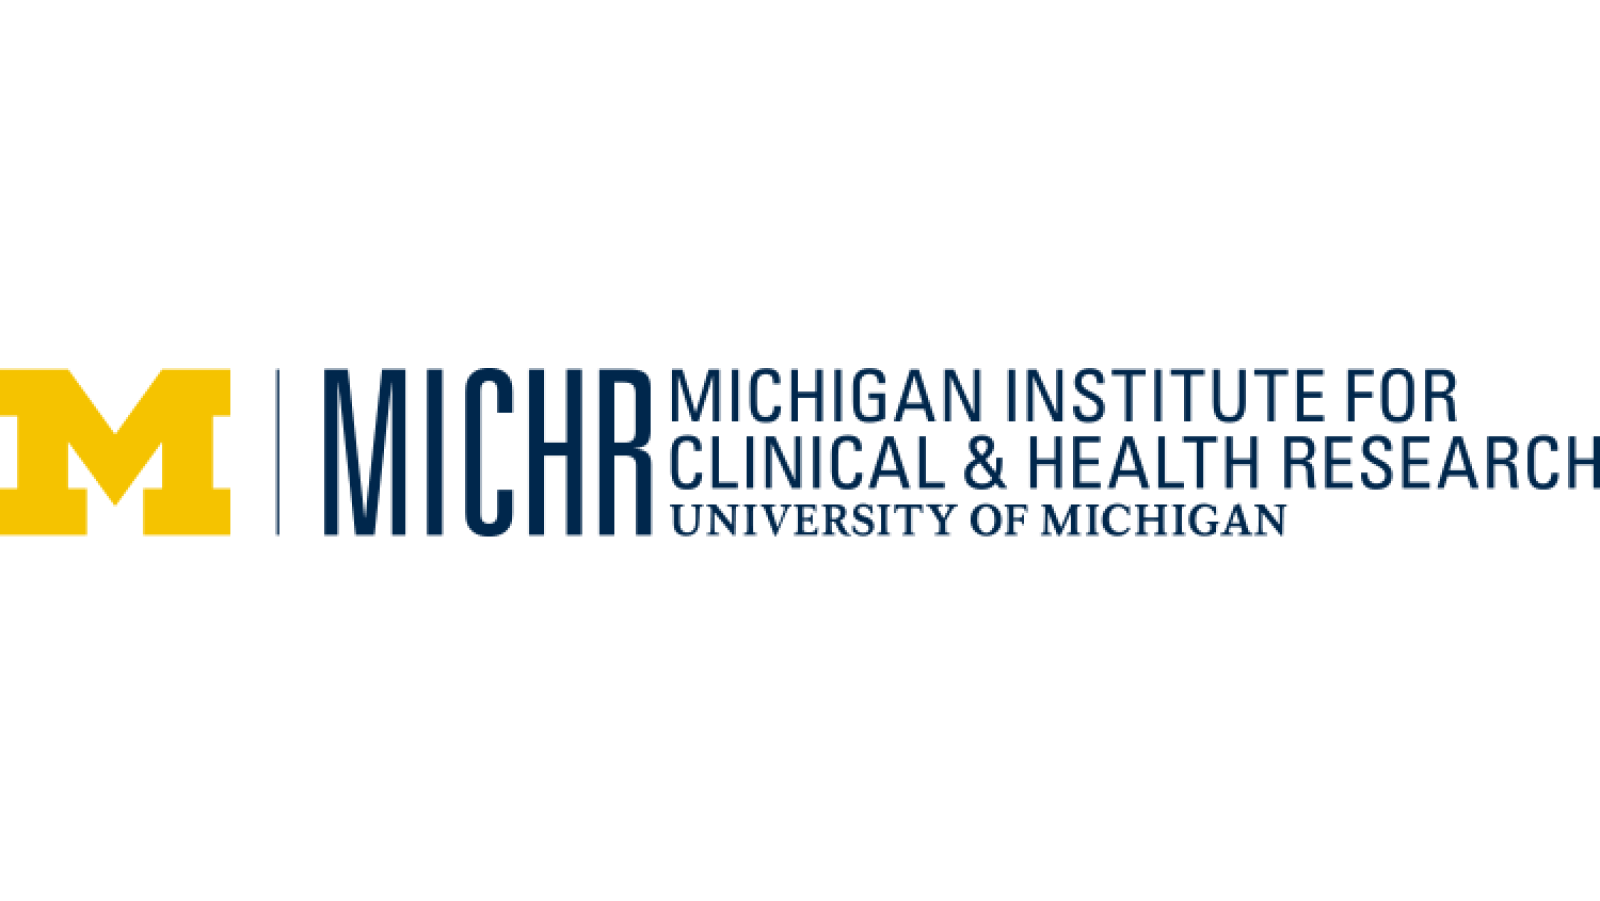 University of Michigan / Michigan Institute for Clinical & Health Research